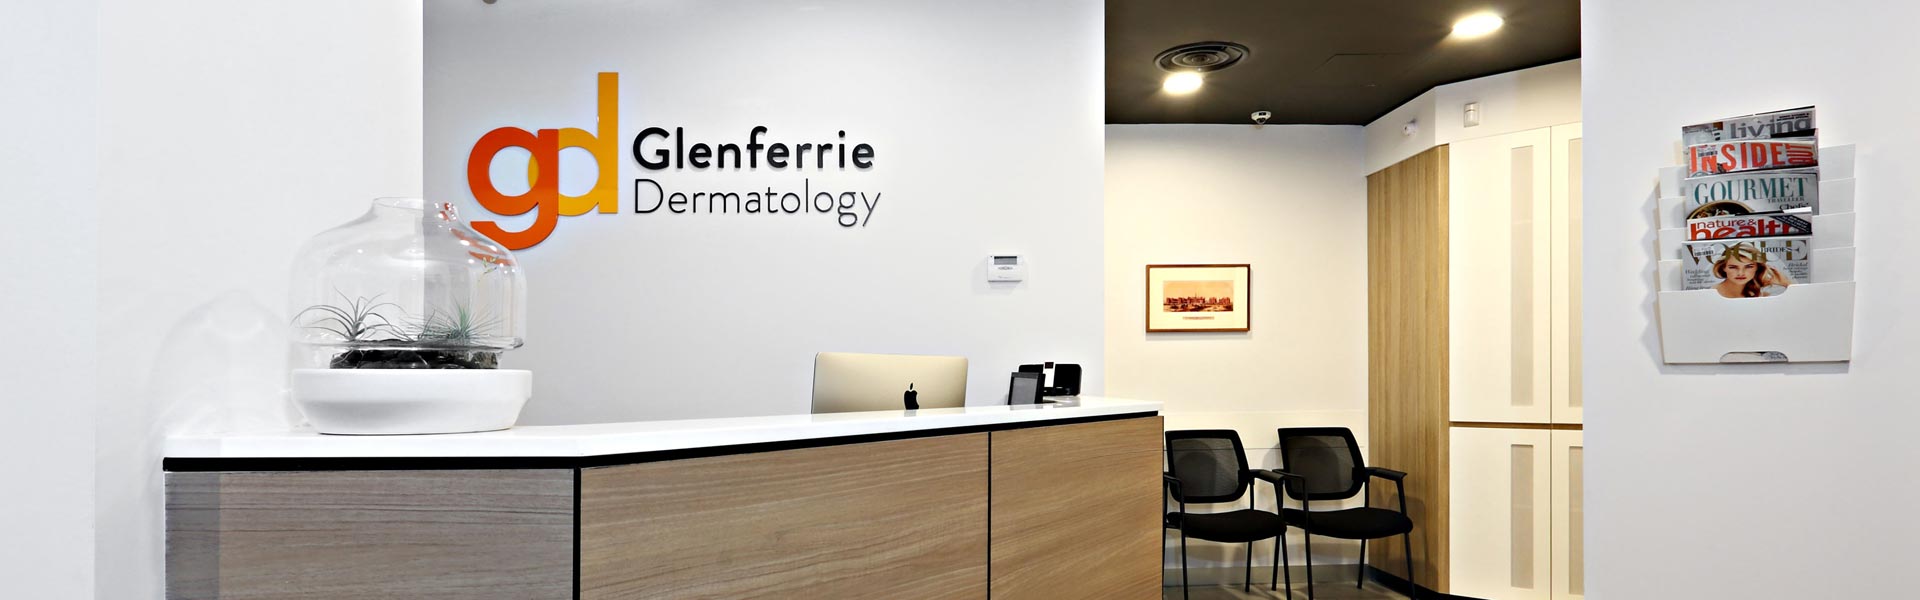 Glenferrie Dermatology